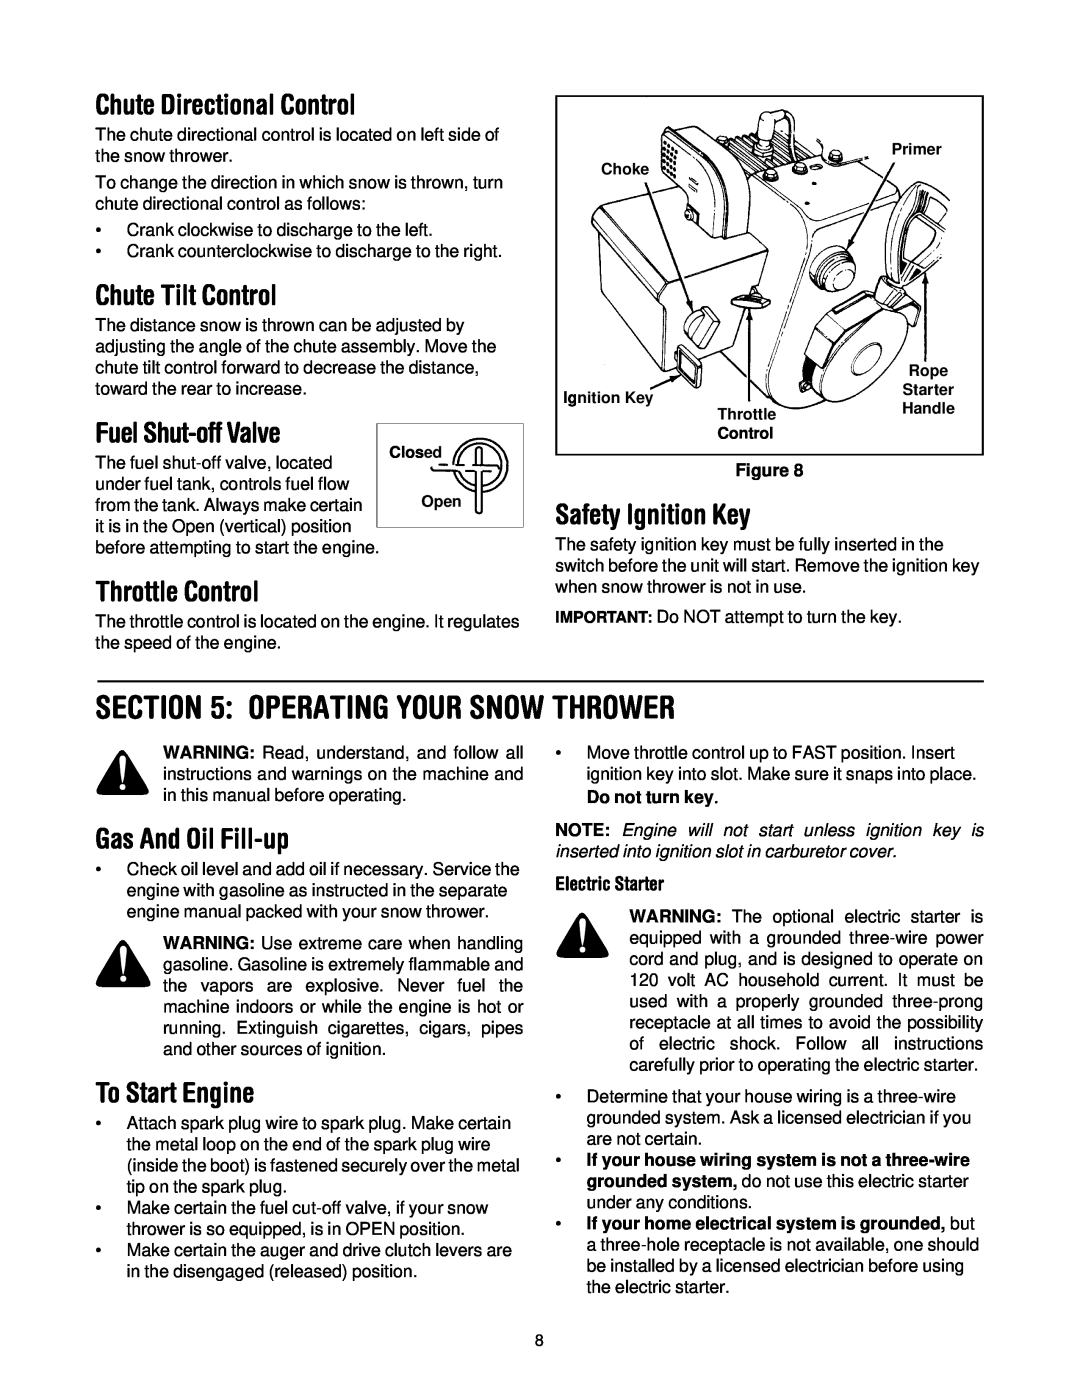 Cub Cadet 522 WE manual Operating Your Snow Thrower, Chute Directional Control, Chute Tilt Control, Fuel Shut-off Valve 